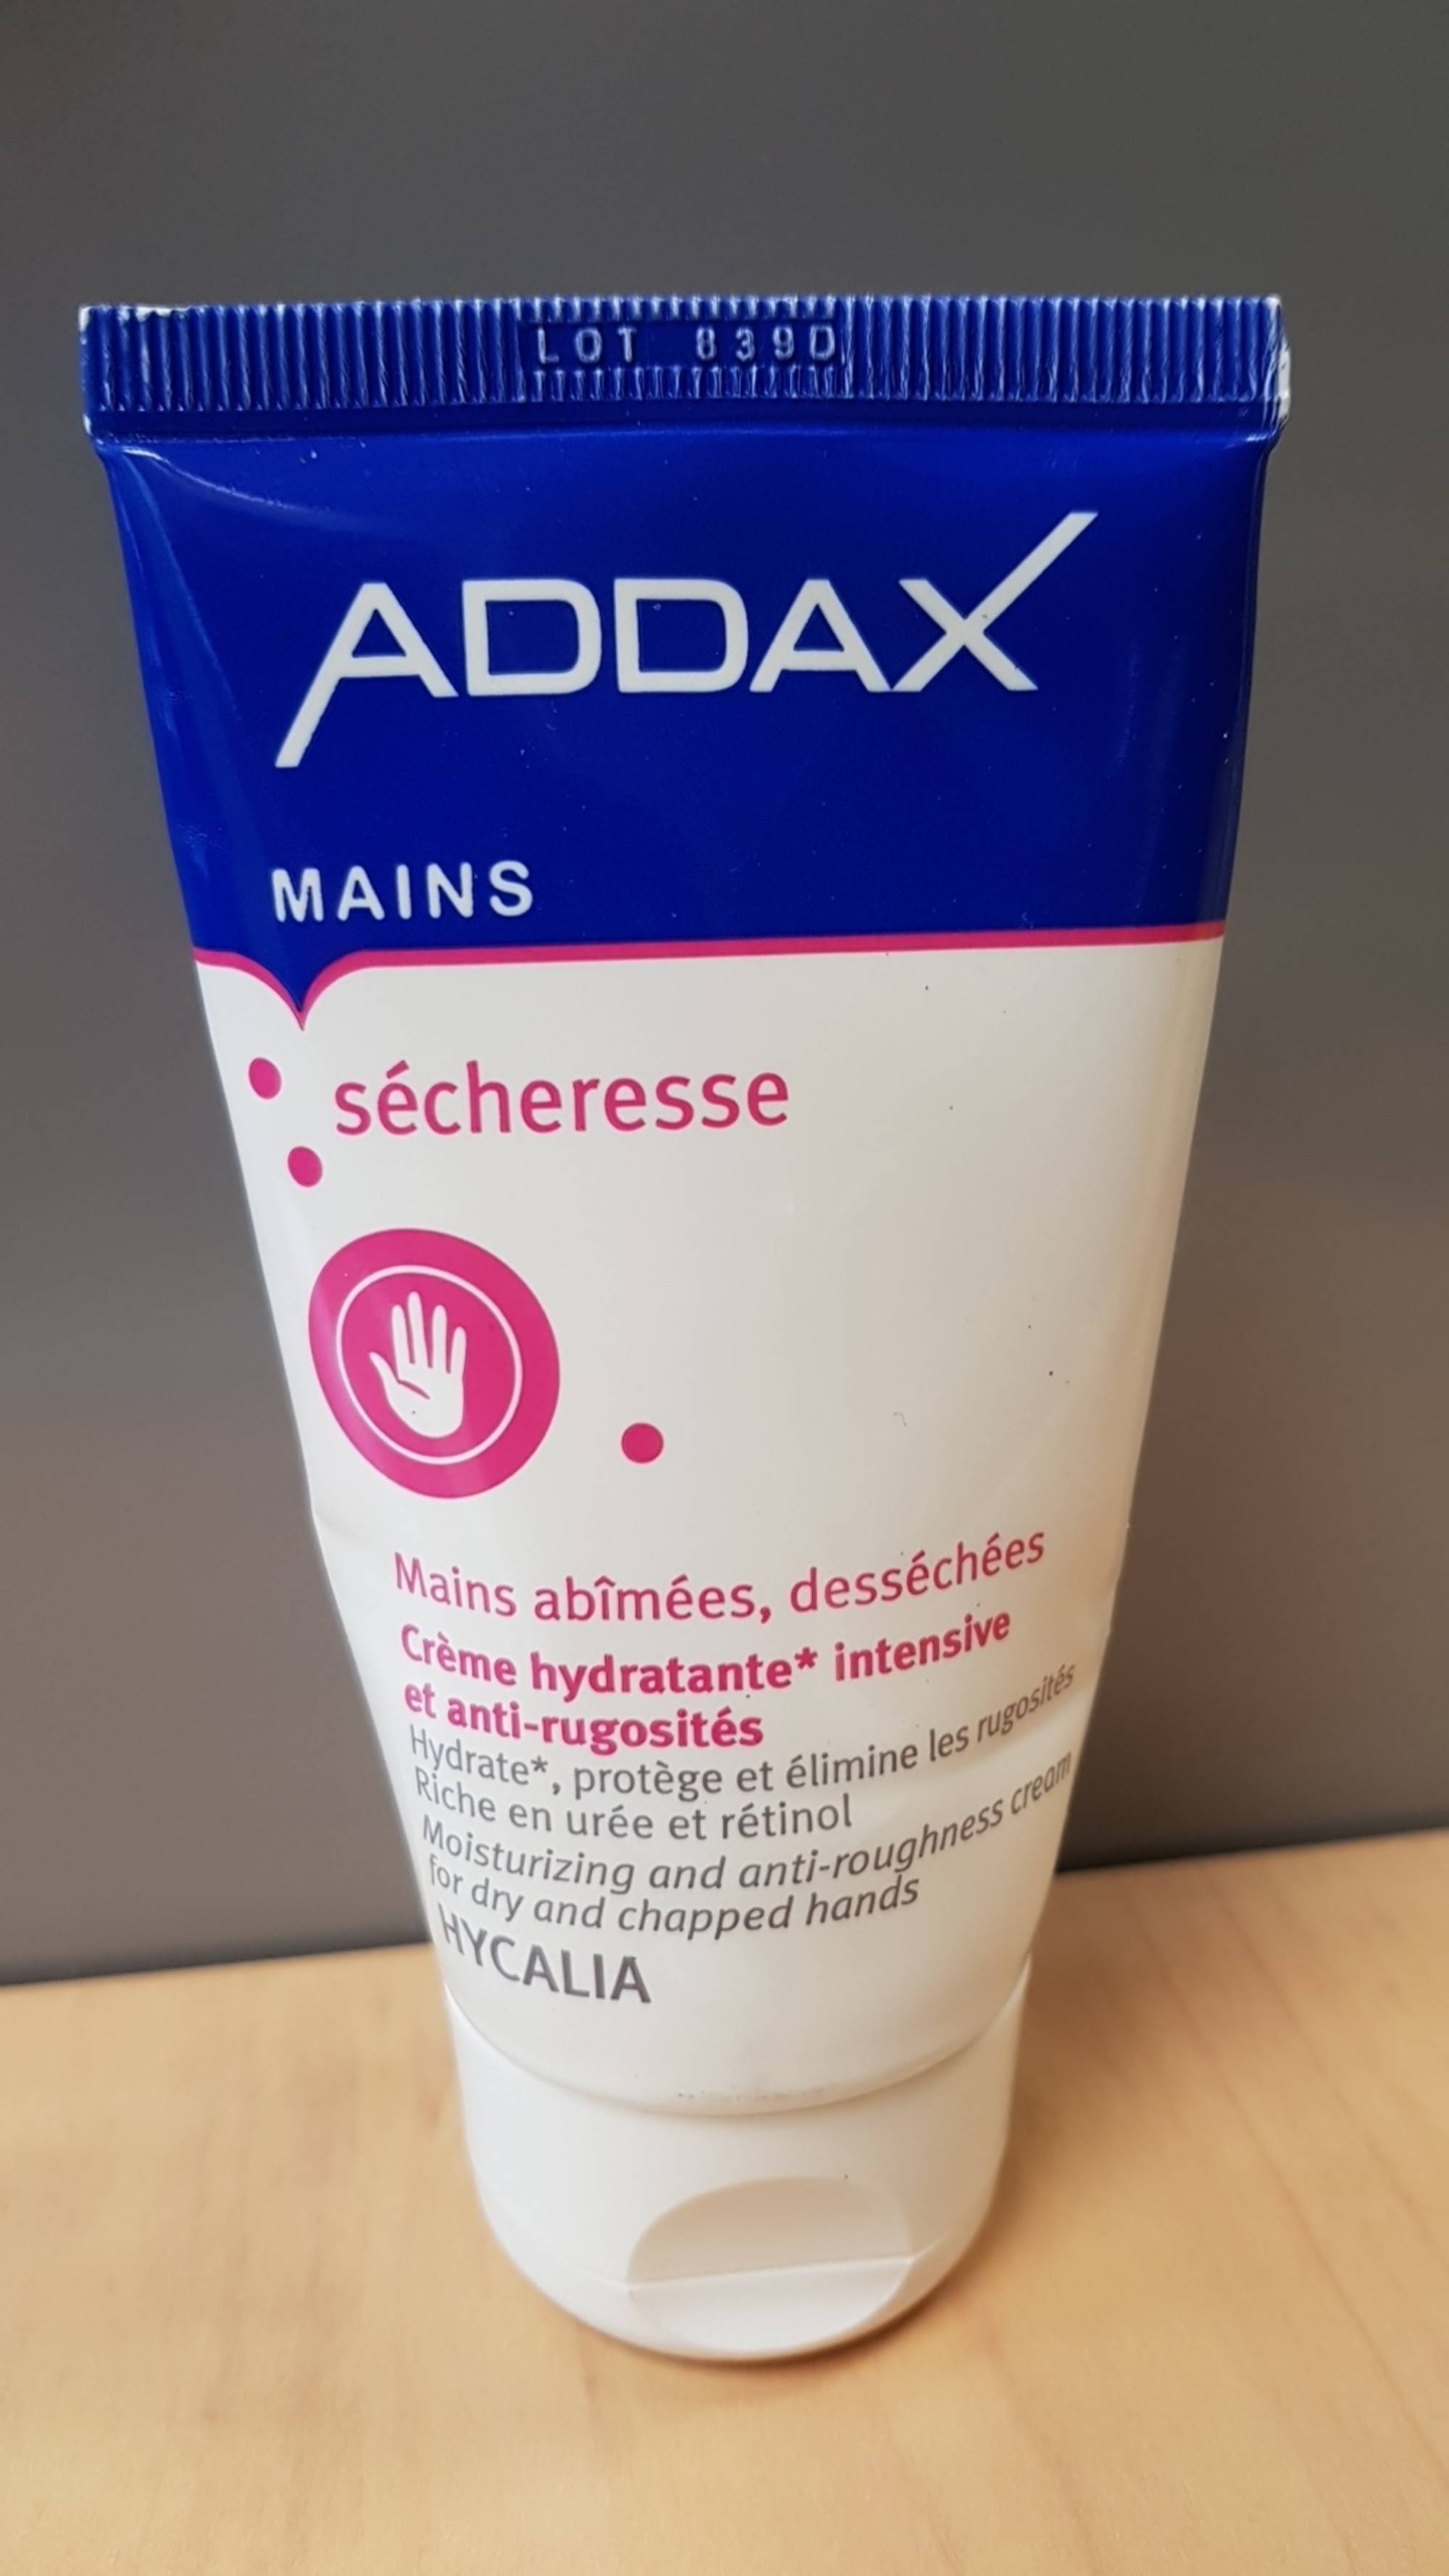 ADDAX - Hycalia - Crème hydratante intensive et anti-rugosités 